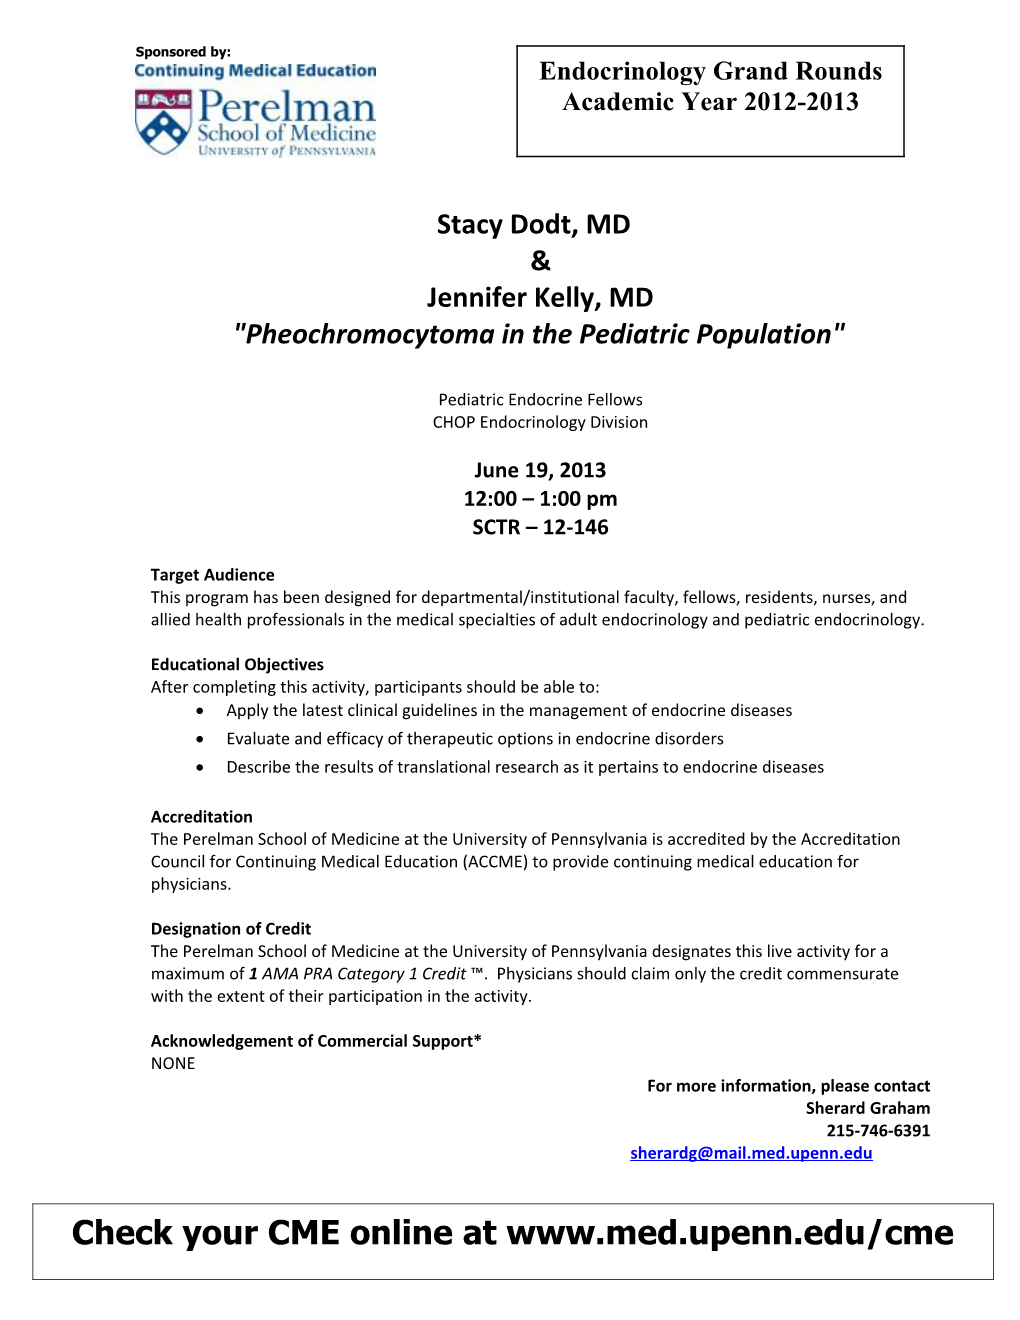 Stacy Dodt, MD Jennifer Kelly, MD Pheochromocytoma in the Pediatric Population